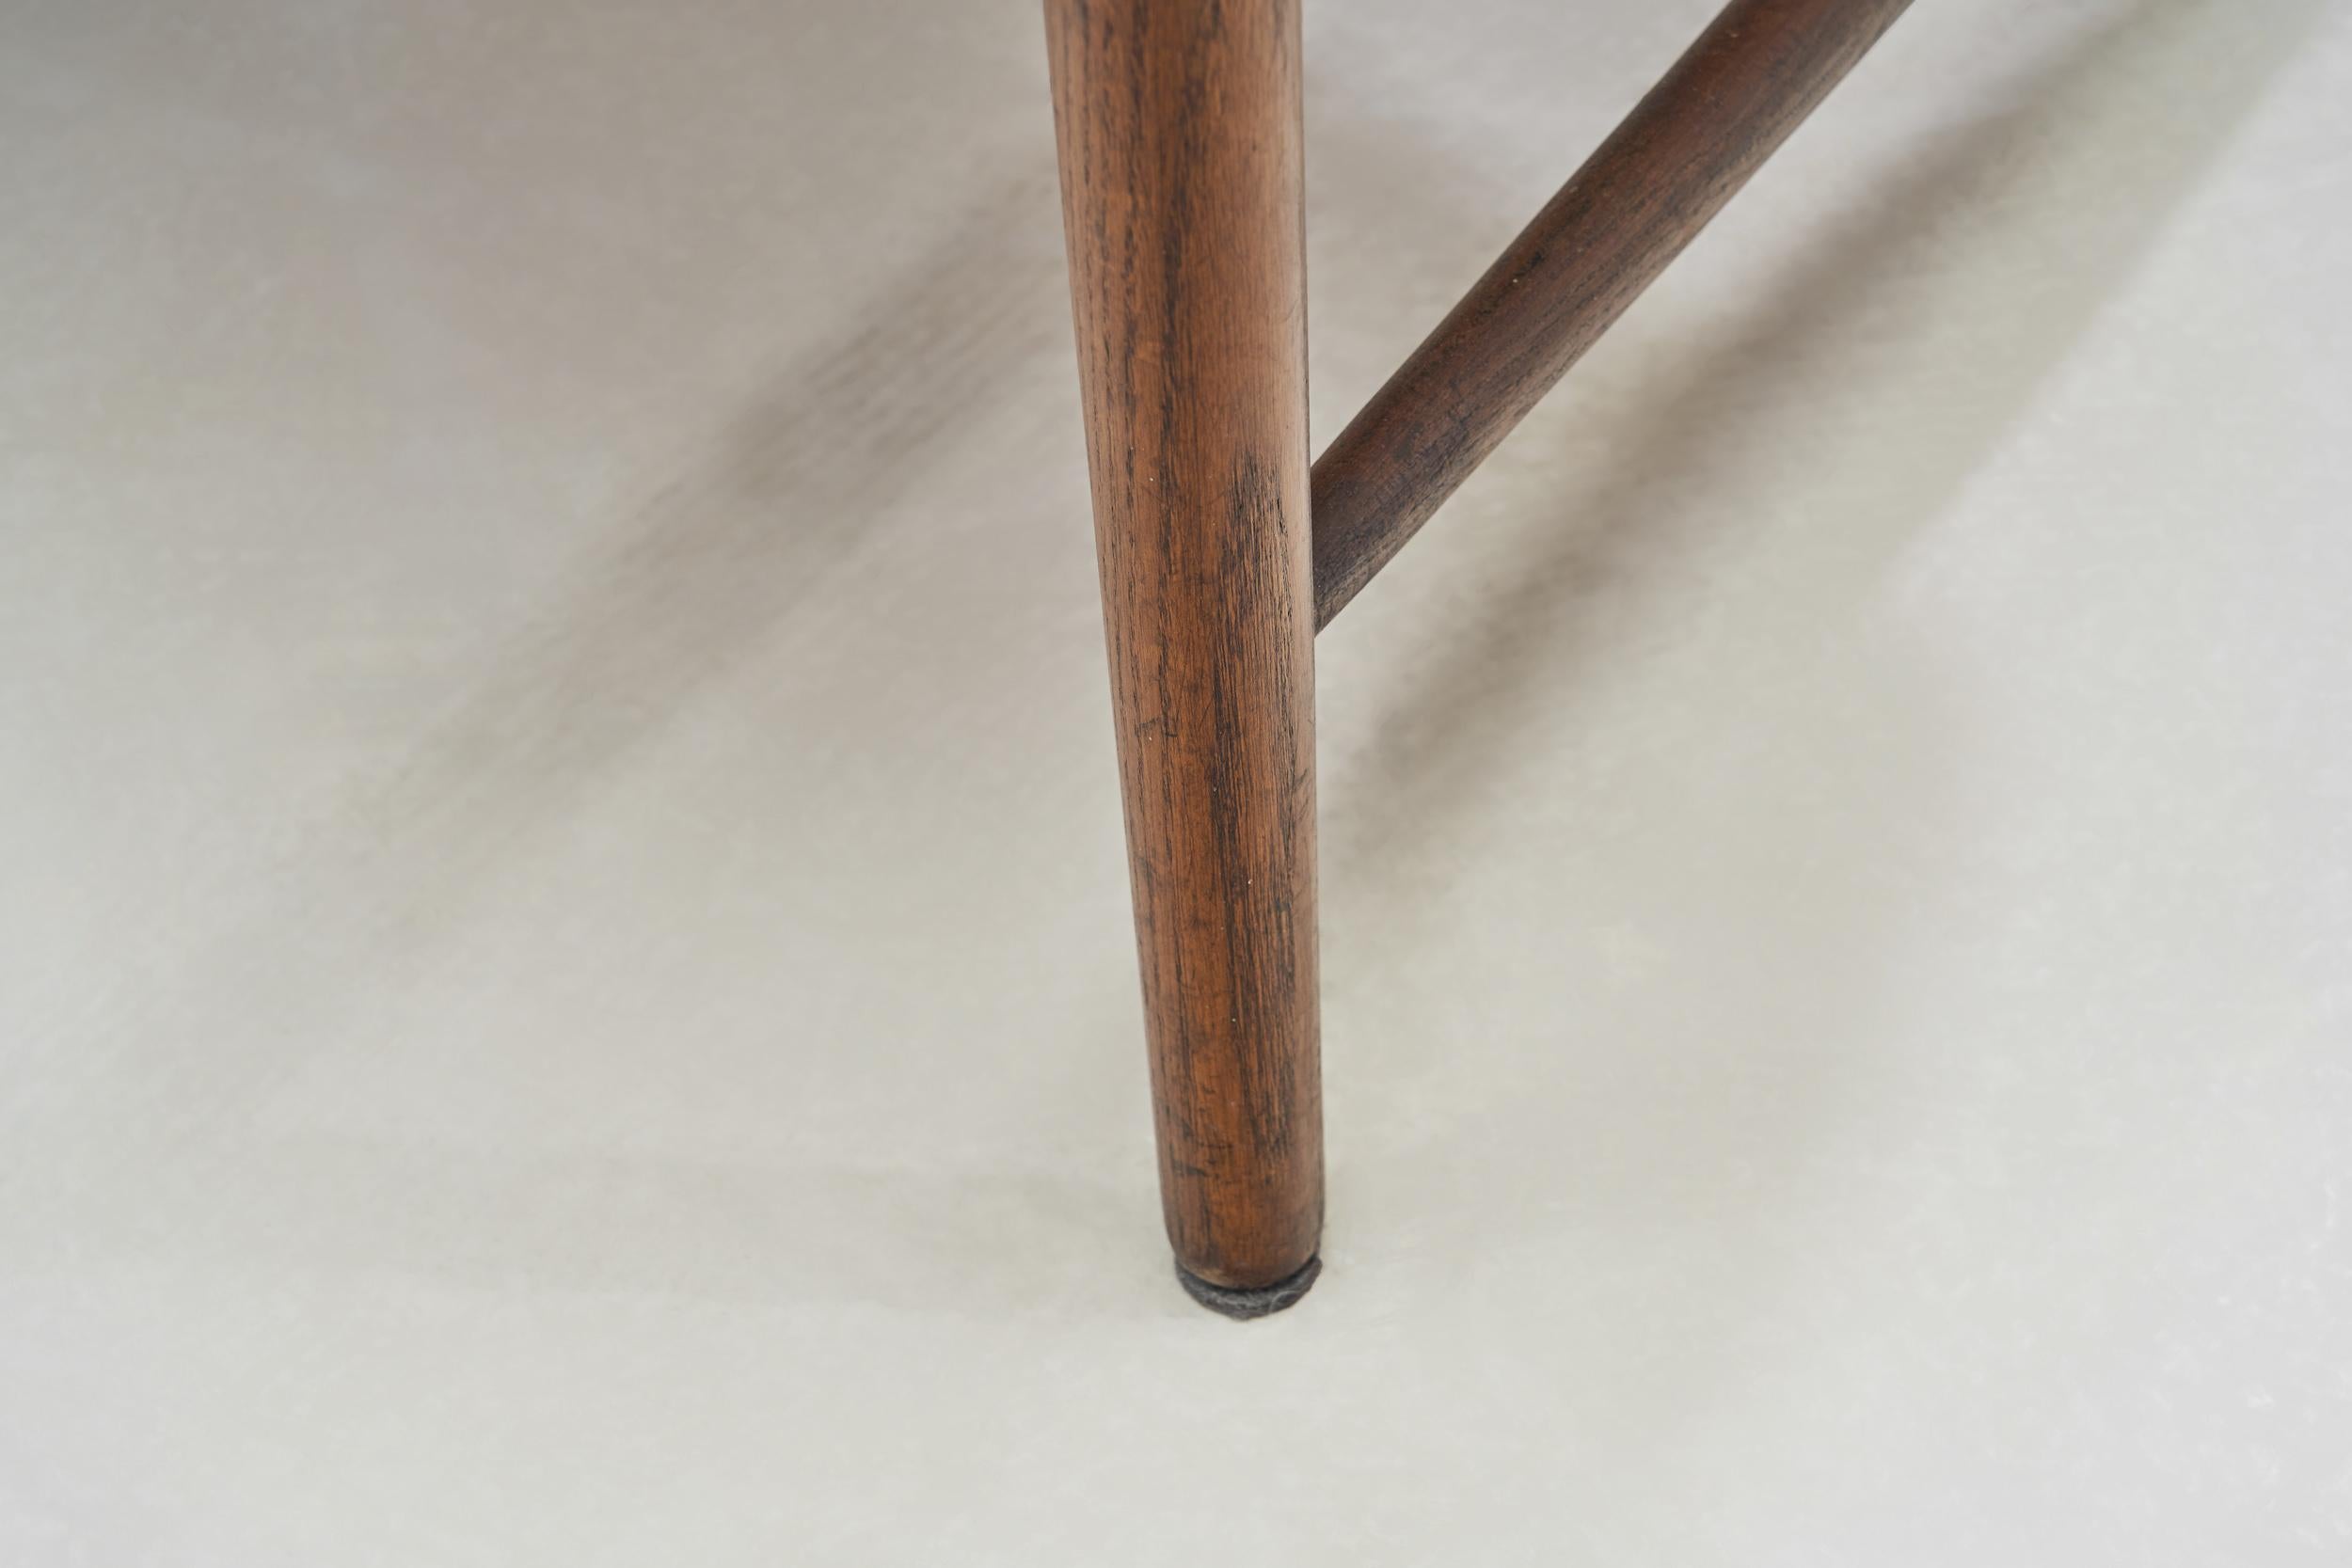 Teak Slatback Chair with Woven Danish Cord Seat, Denmark ca 1960s For Sale 9